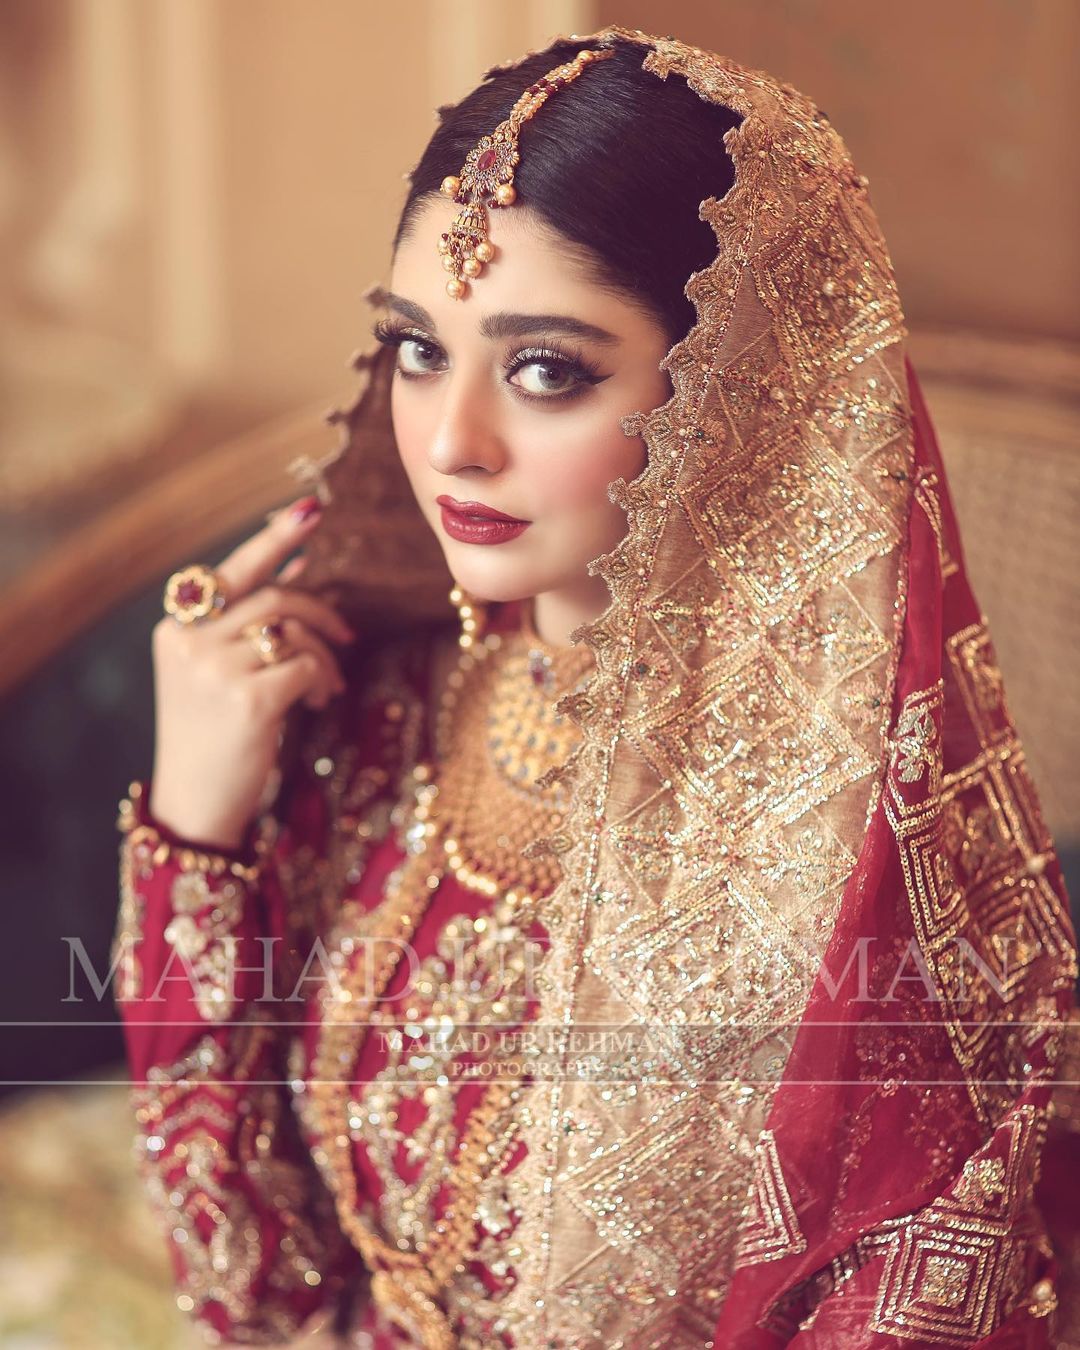 Noor Khan Looks Ravishing In Her Latest Bridal Shoot | Reviewit.pk